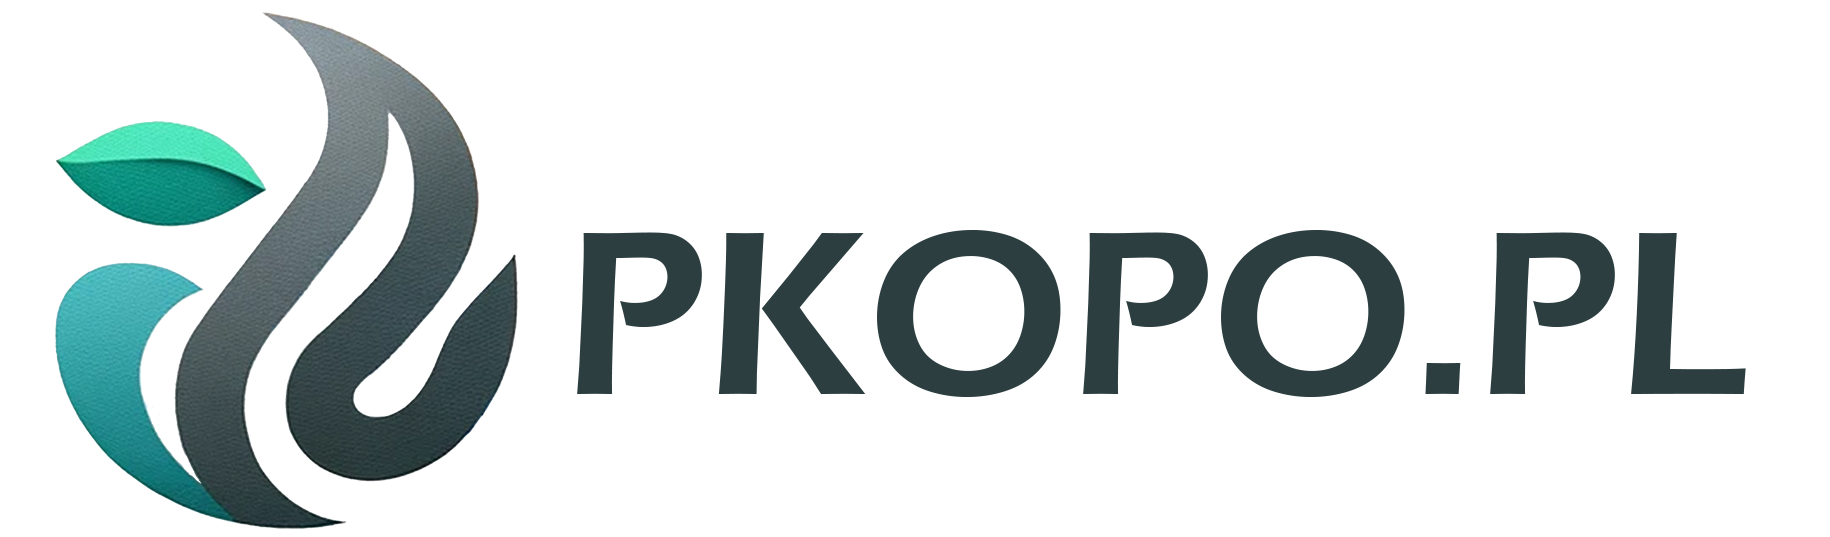 pkopo.pl